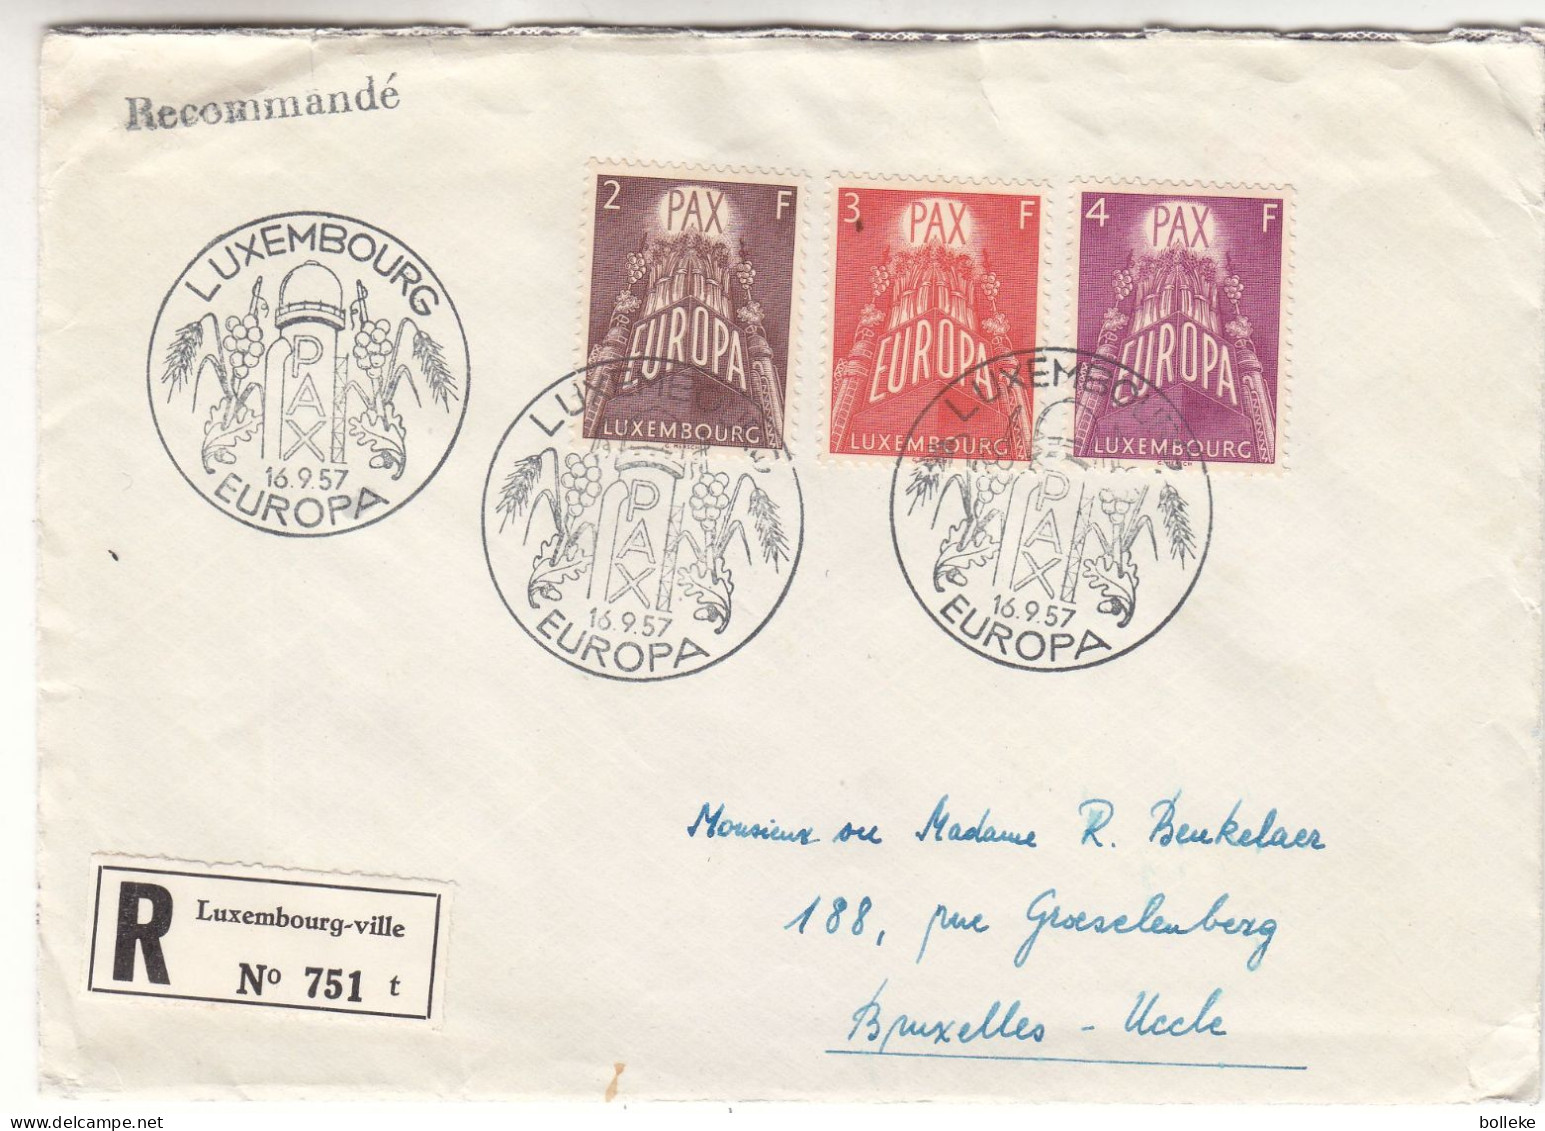 Luxembourg - Lettre FDC Recom De 1957 - Oblit Luxembourg - Europa 57 -  Valeur 75 Euros - Cartas & Documentos